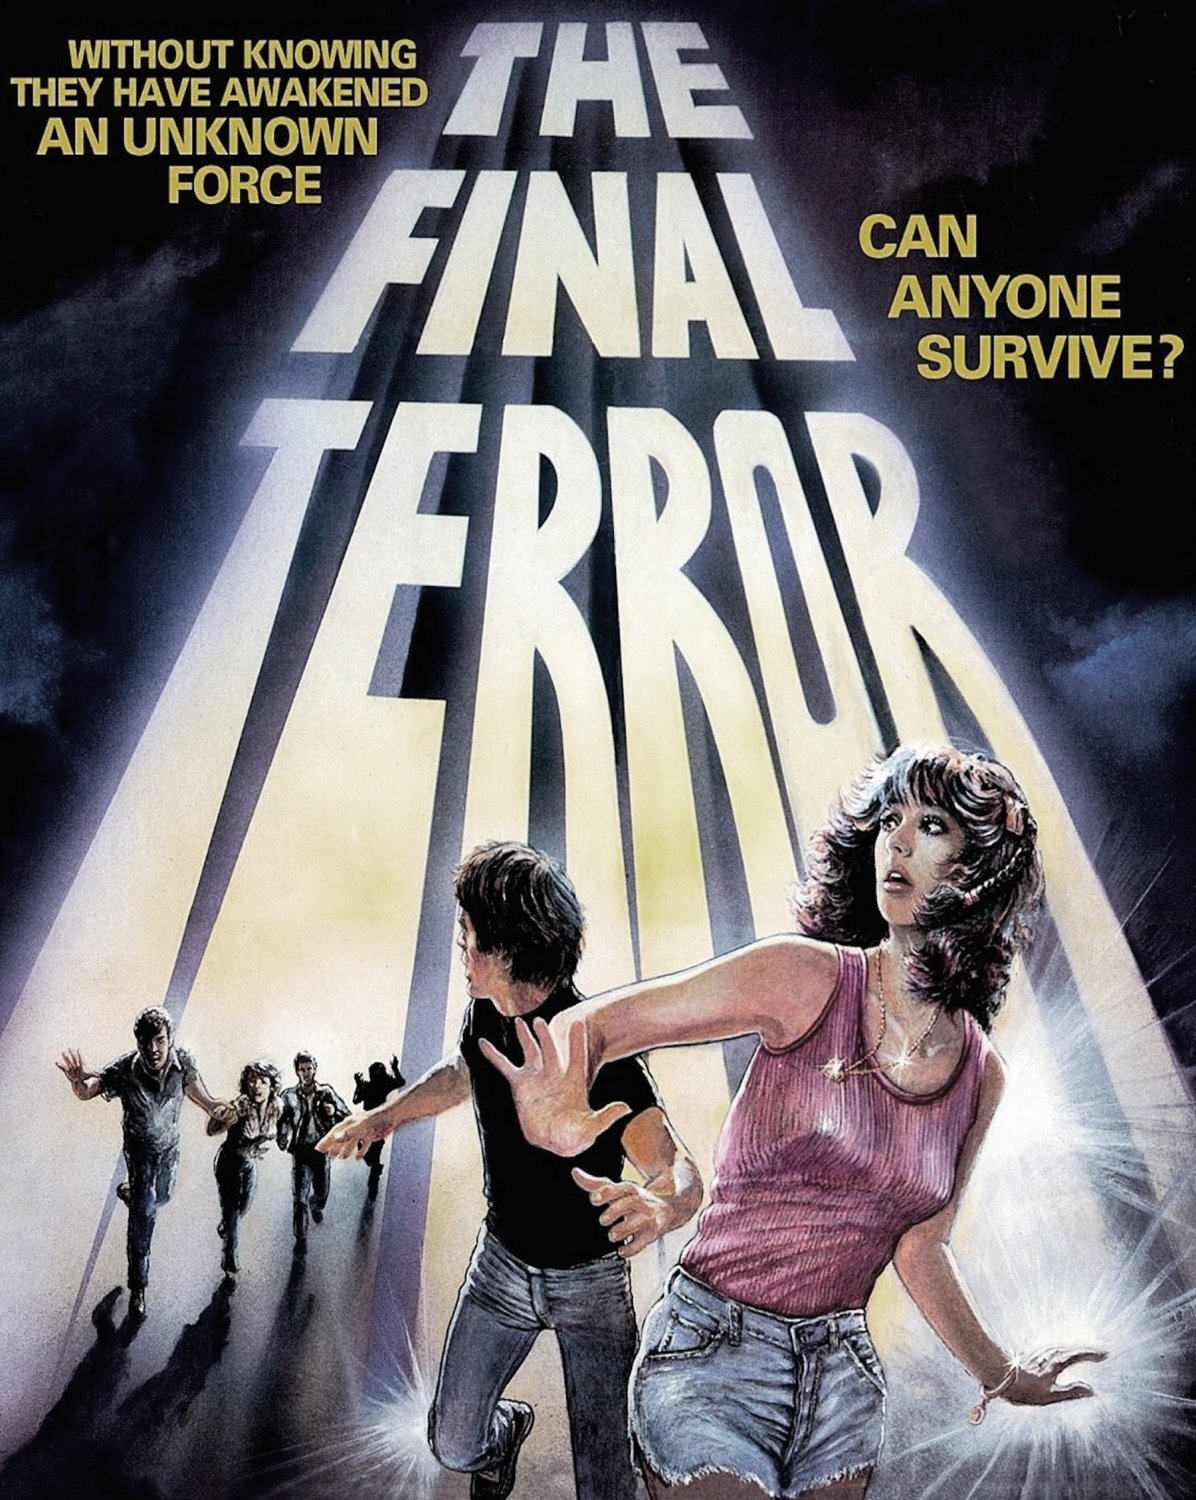 The Final Terror (DVD)